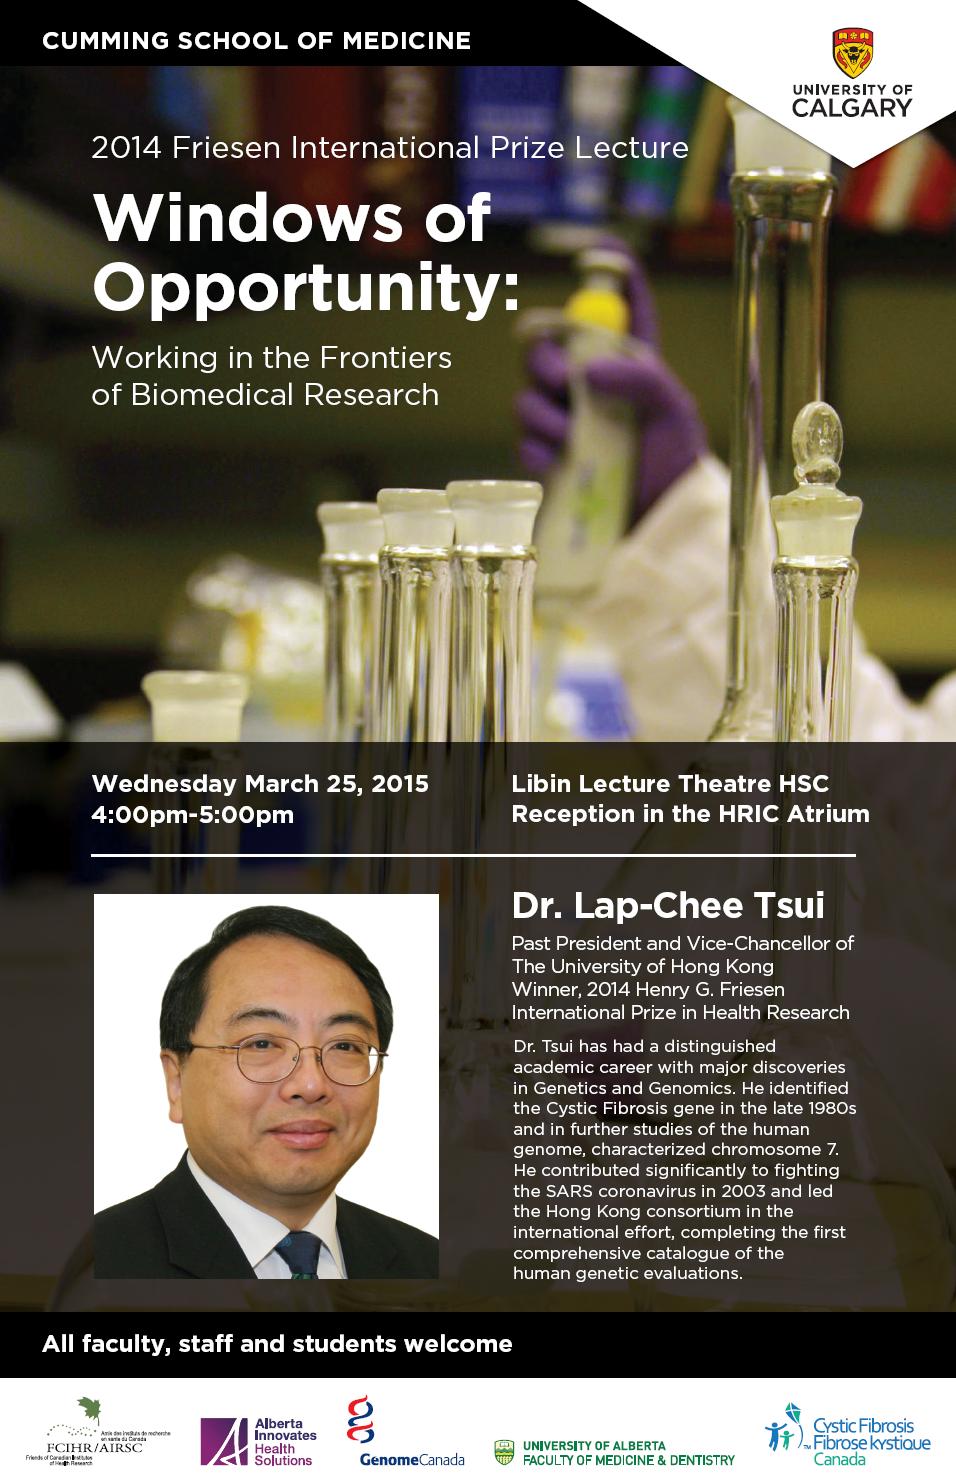 U Calgary Poster - Dr. Lap-Chee Tsui